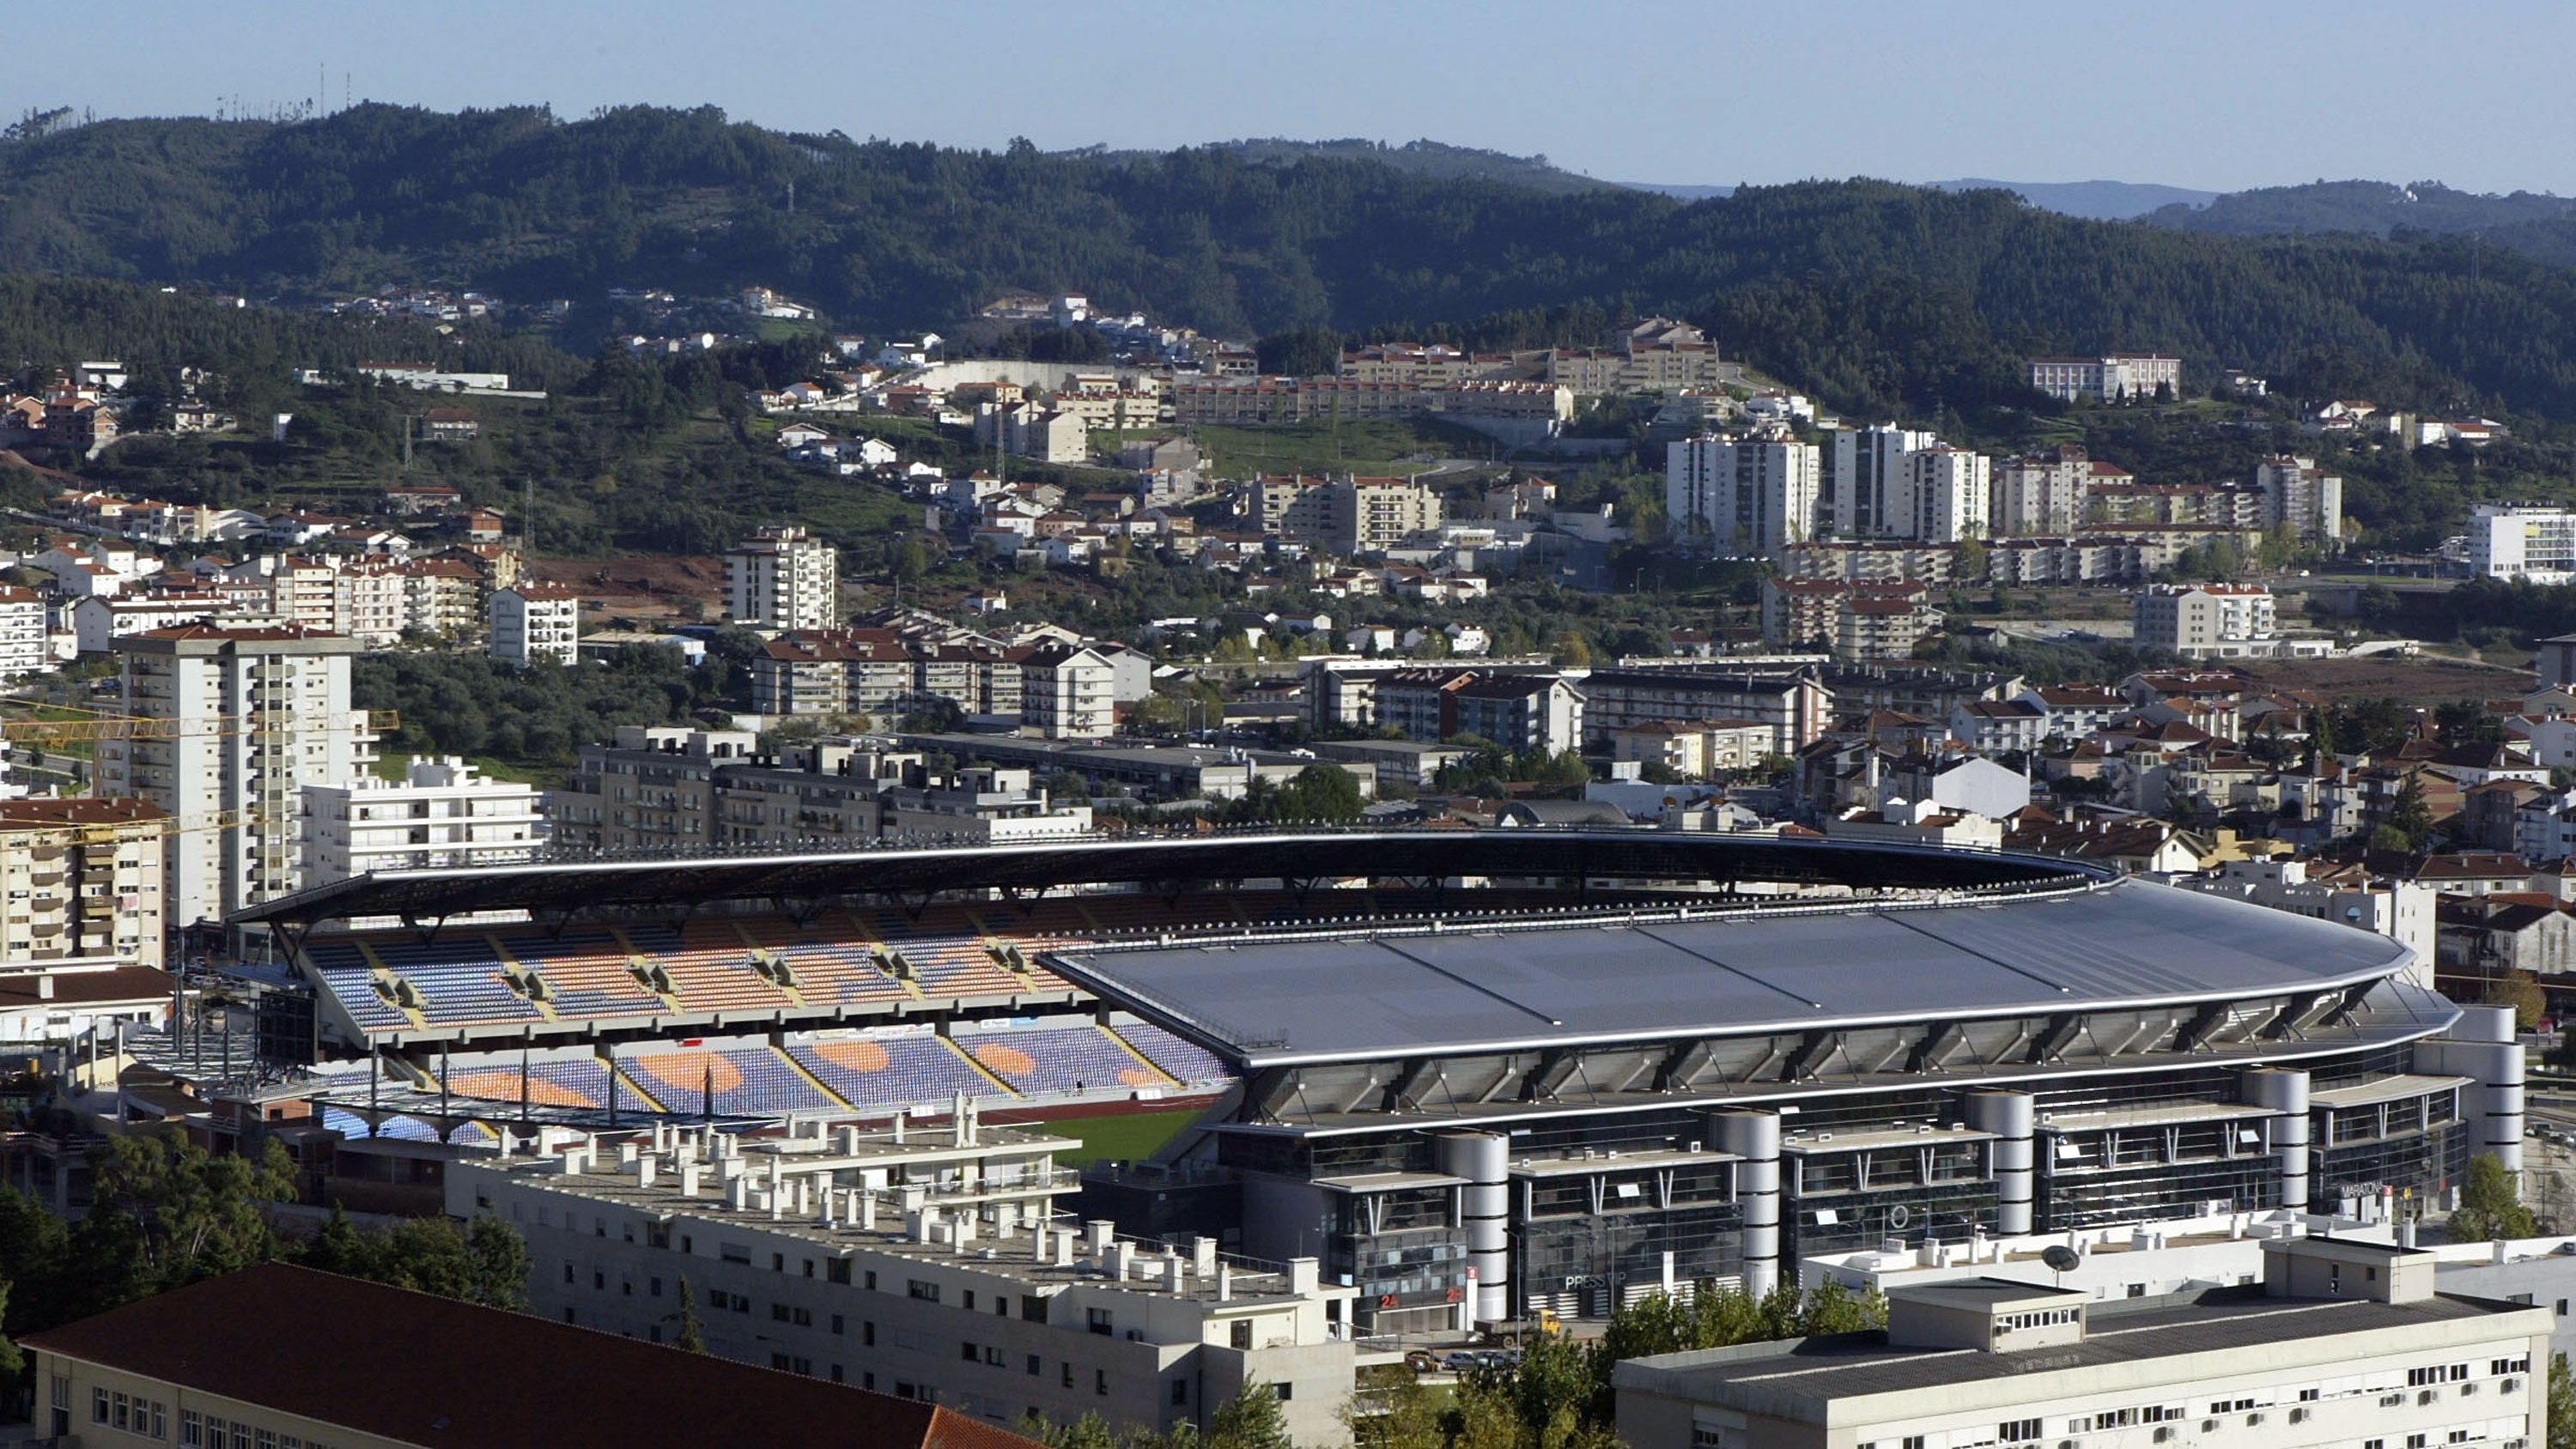 General view of Municipal Stadium, Coimbra.